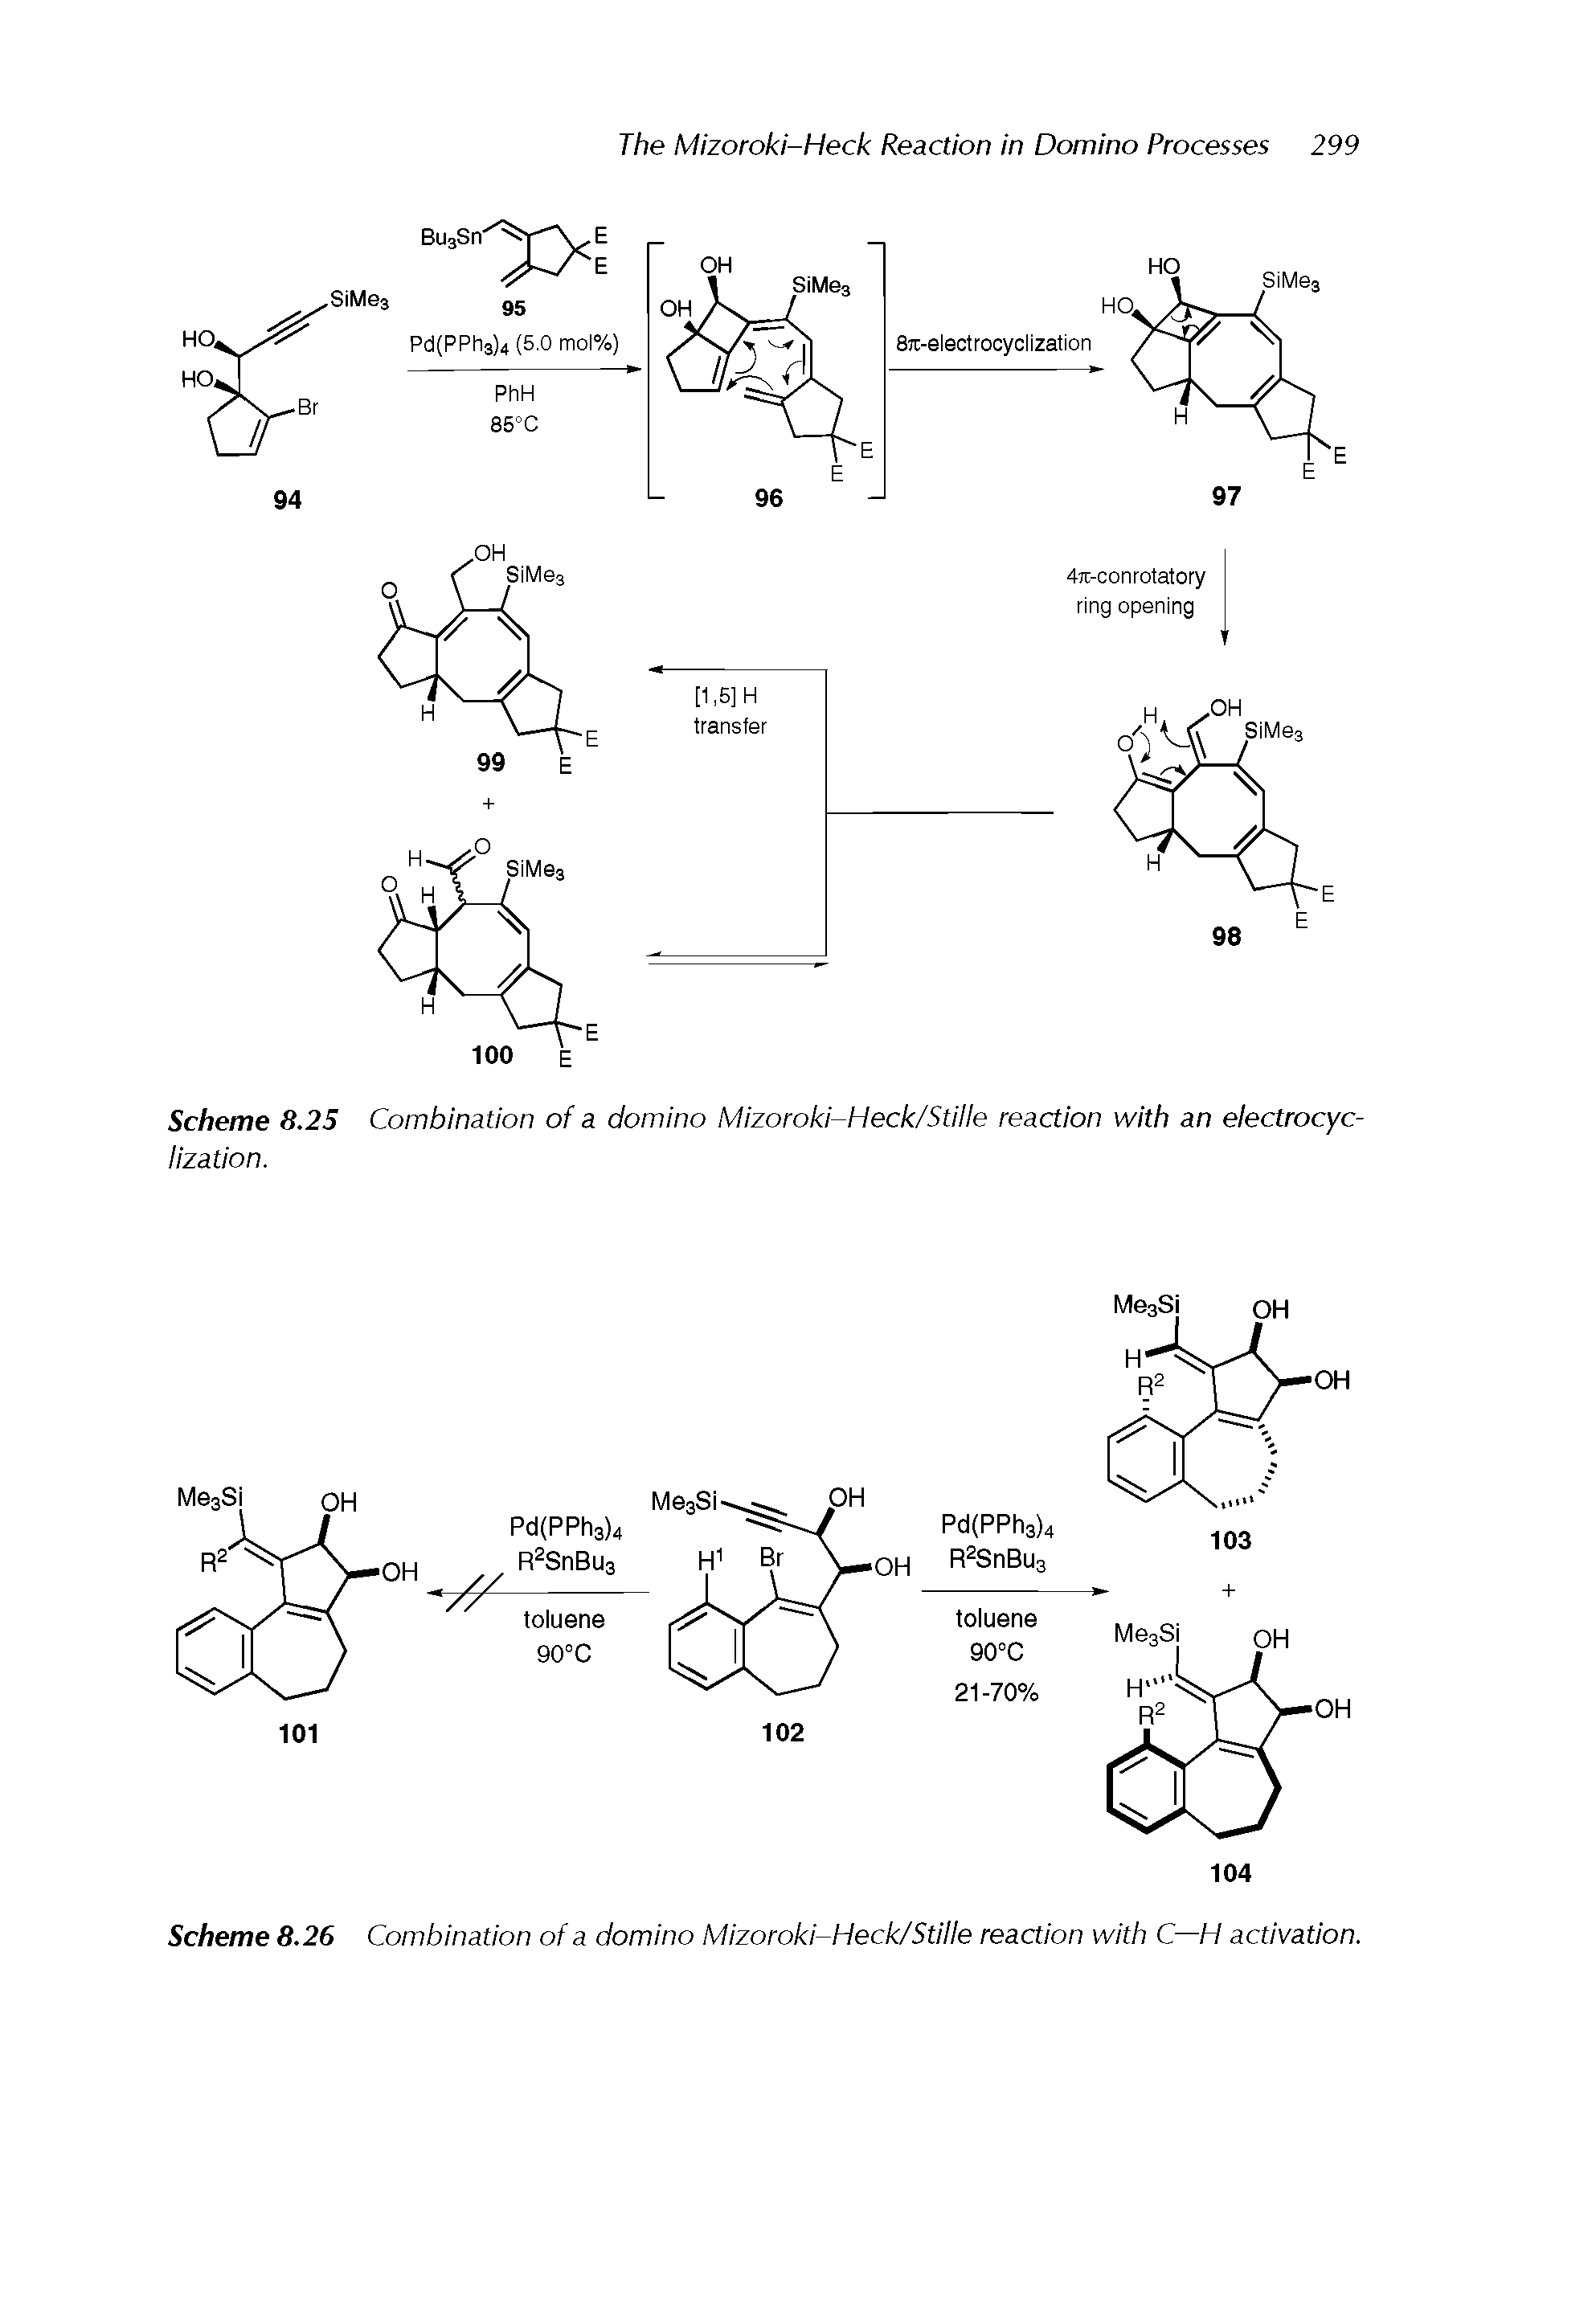 Scheme 8.26 Combination of a domino Mizoroki-Heck/Stille reaction with C—H activation.